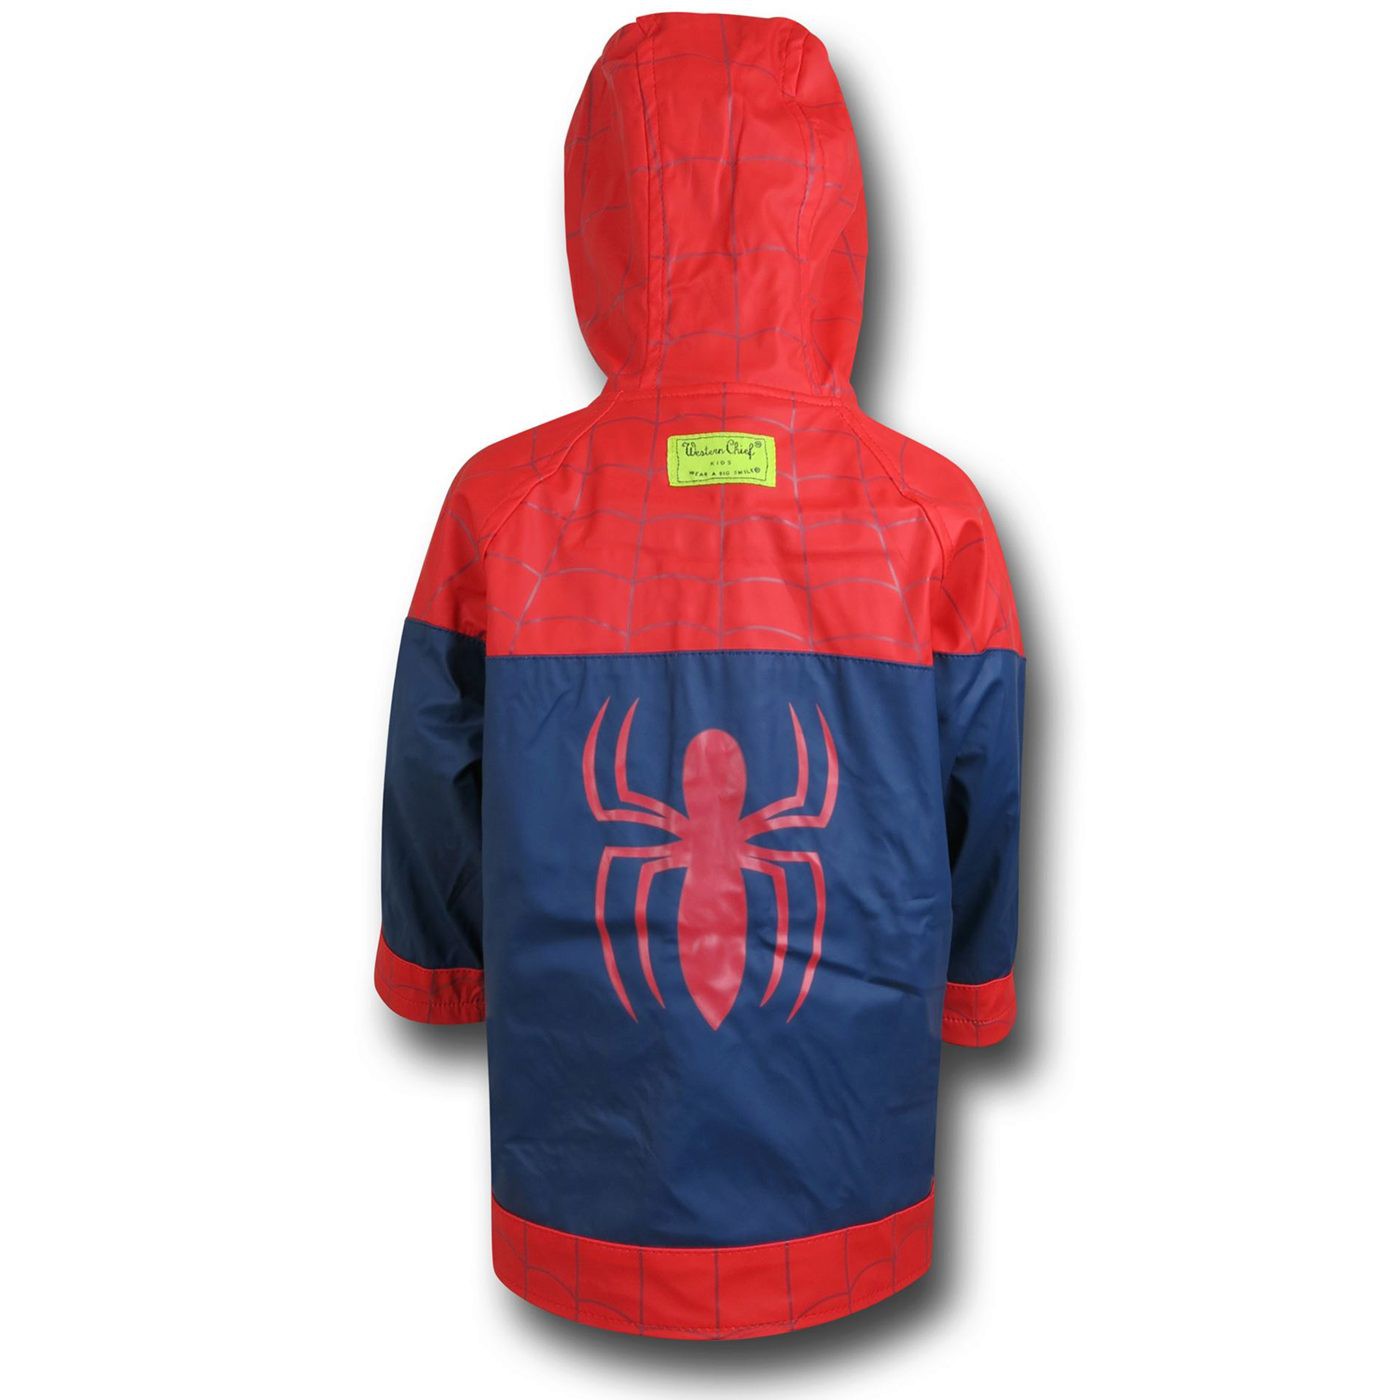 Spiderman Kids Costume Rain Coat